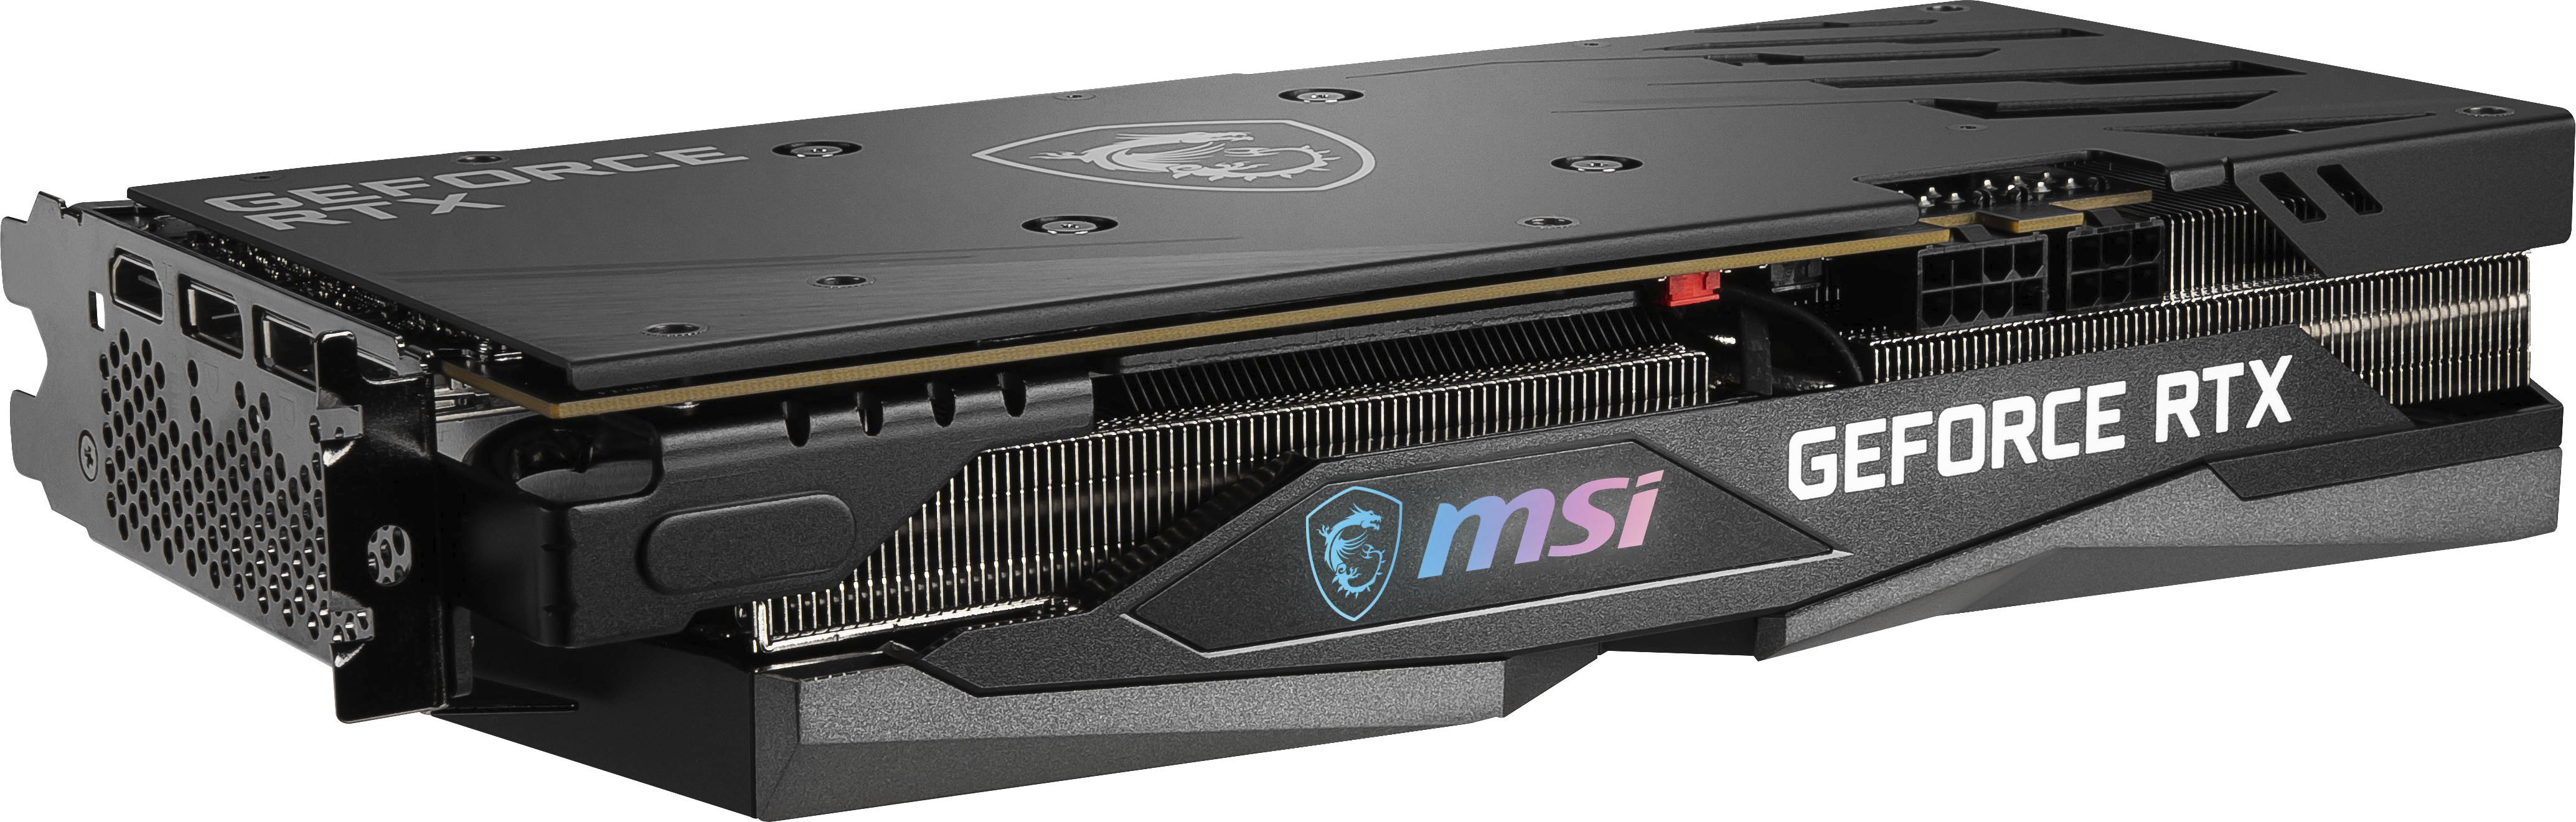 PC/タブレット PCパーツ Best Buy: MSI NVIDIA GeForce RTX 3060 Gaming X 12G OC 12GB GDDR6 